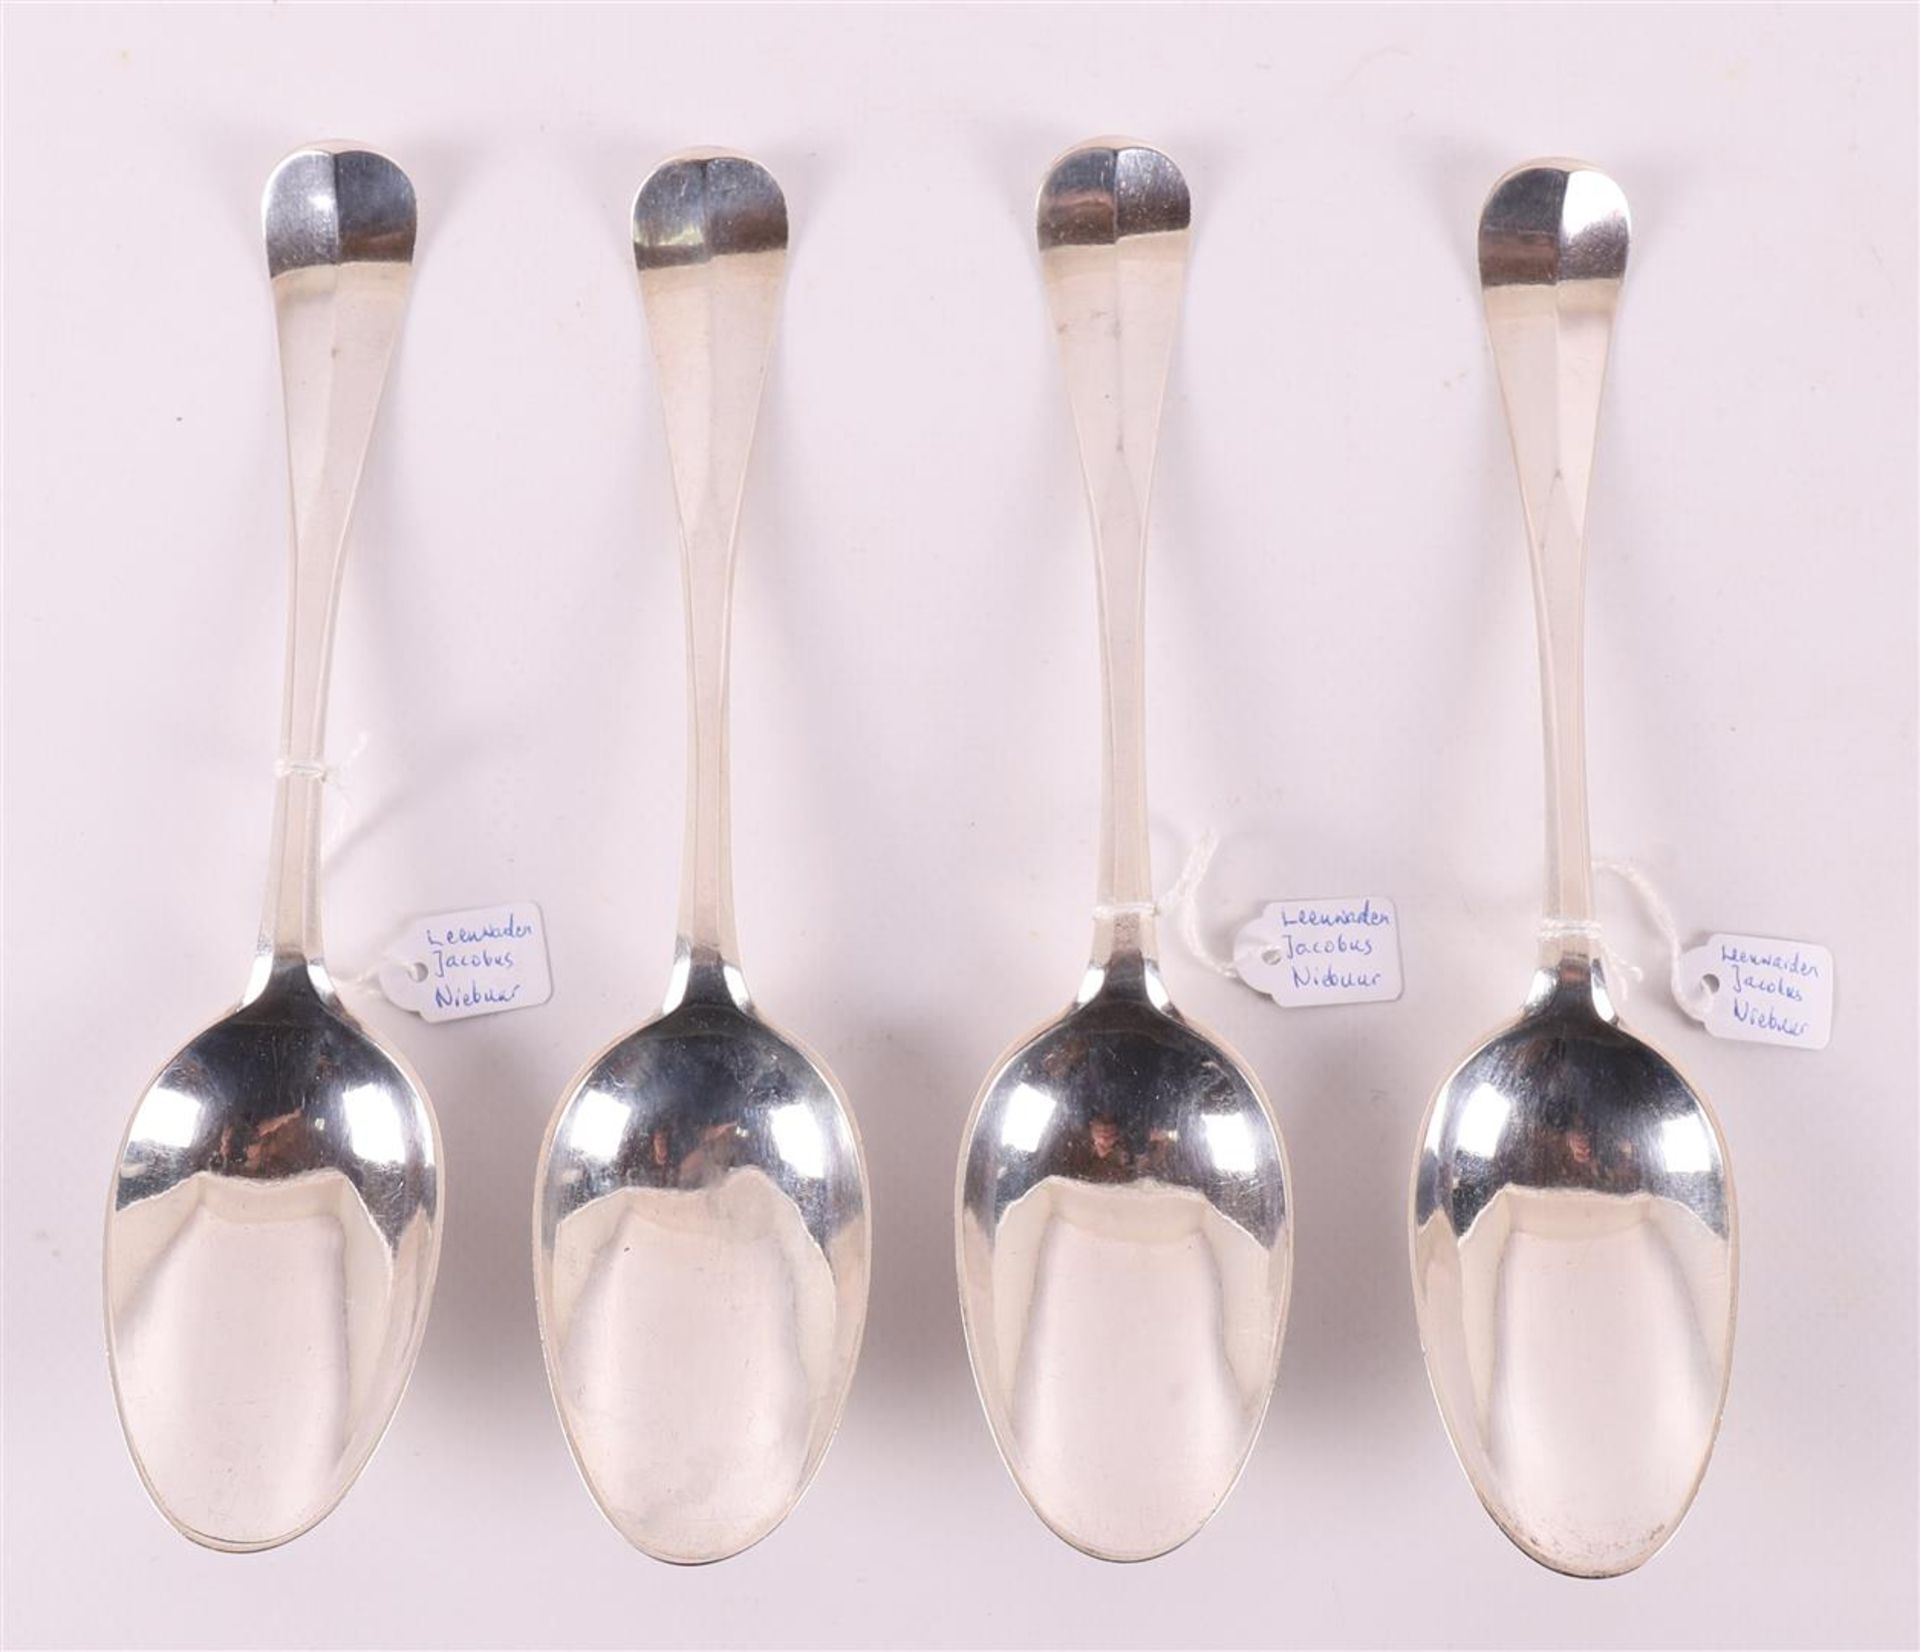 Four first grade content 925/1000 silver spoons, Friesland, Leeuwarden,